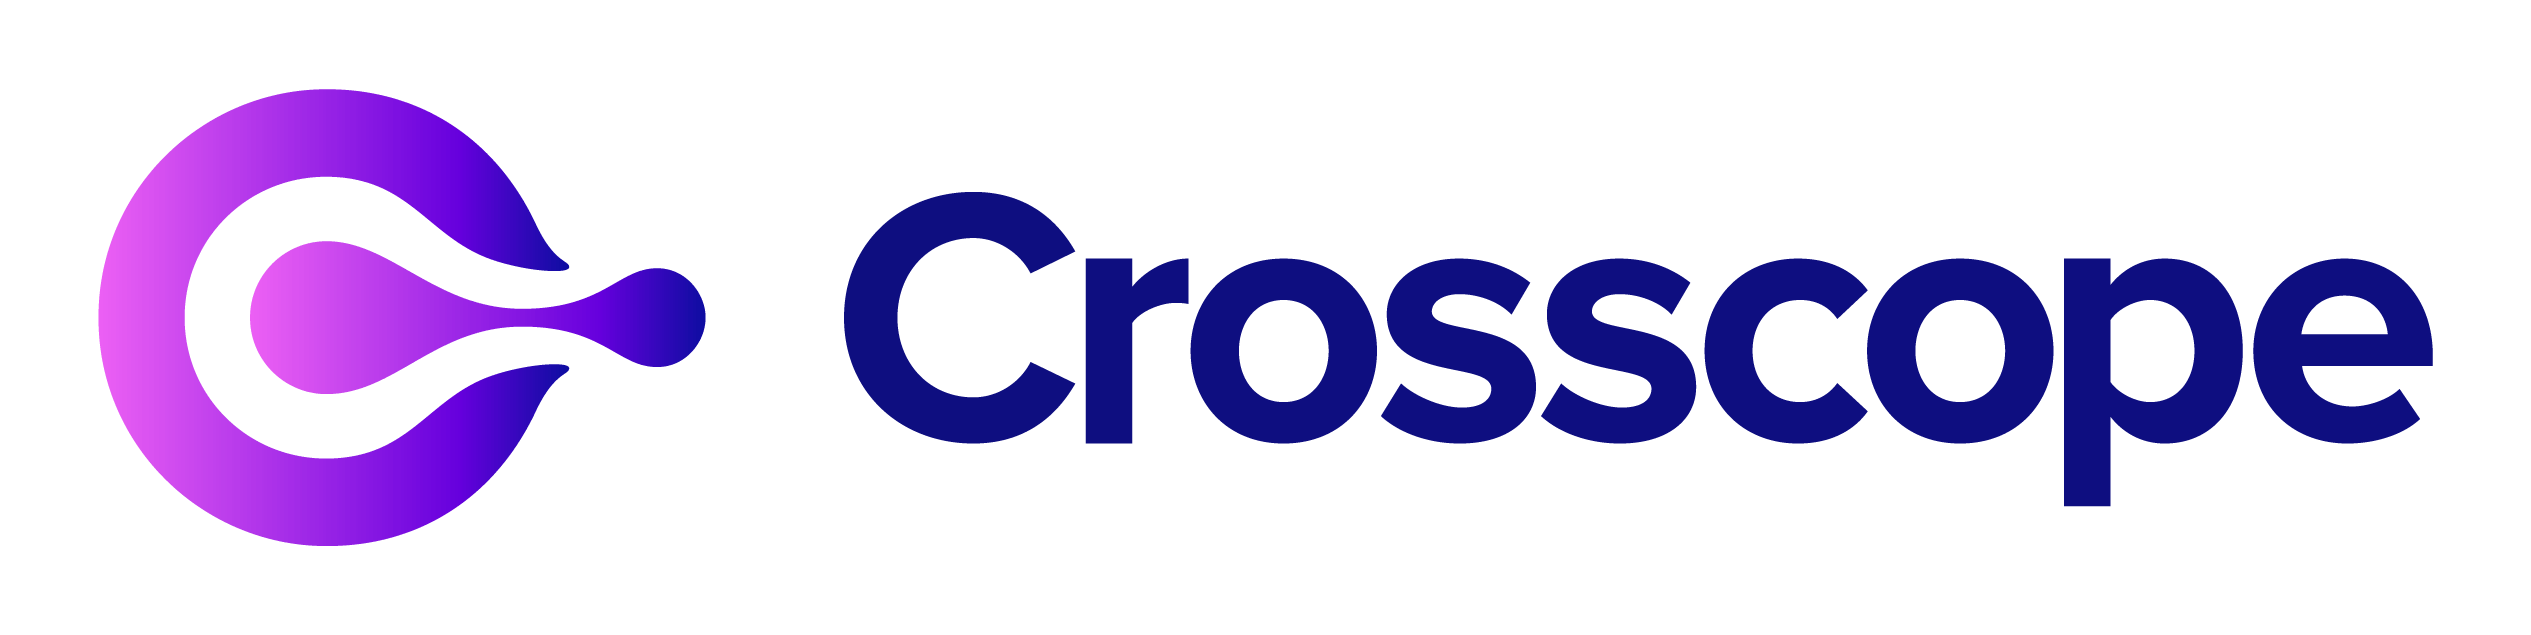 Crosscope logo